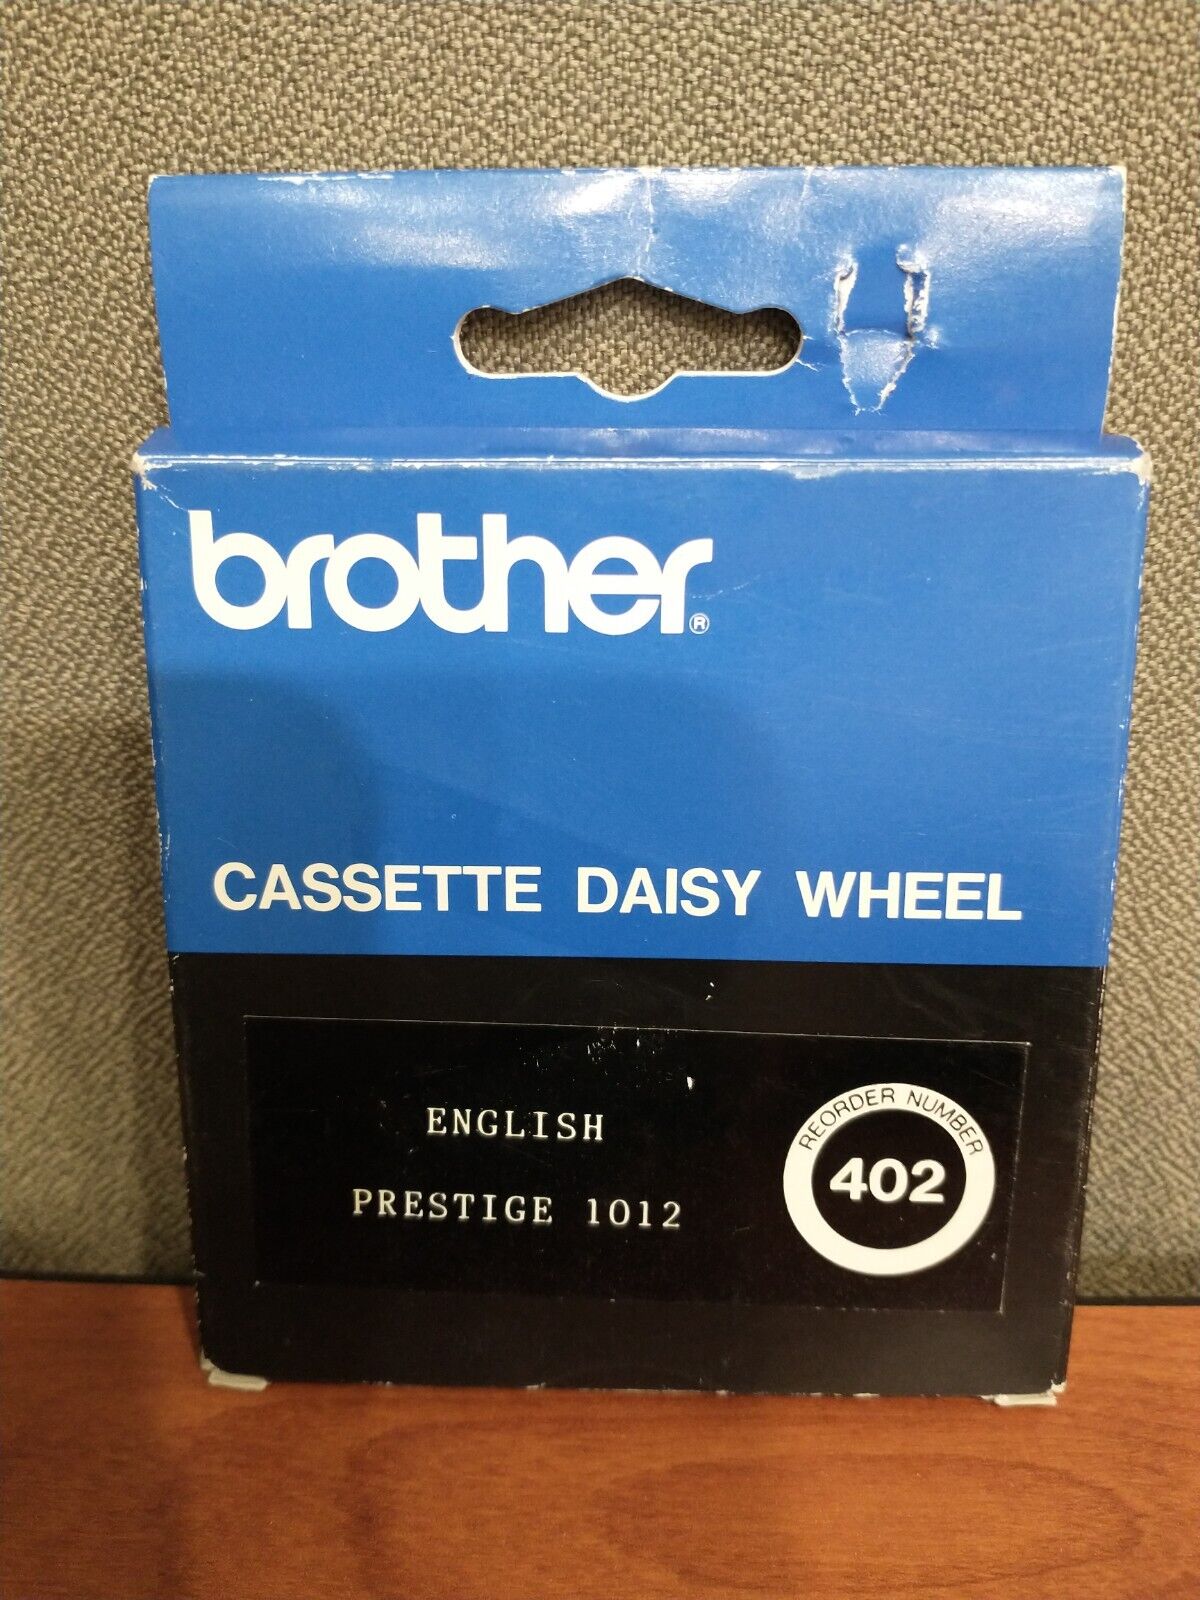 Vintage Brother Cassette Daisy Wheel English Prestige 1012 Reorder # 402